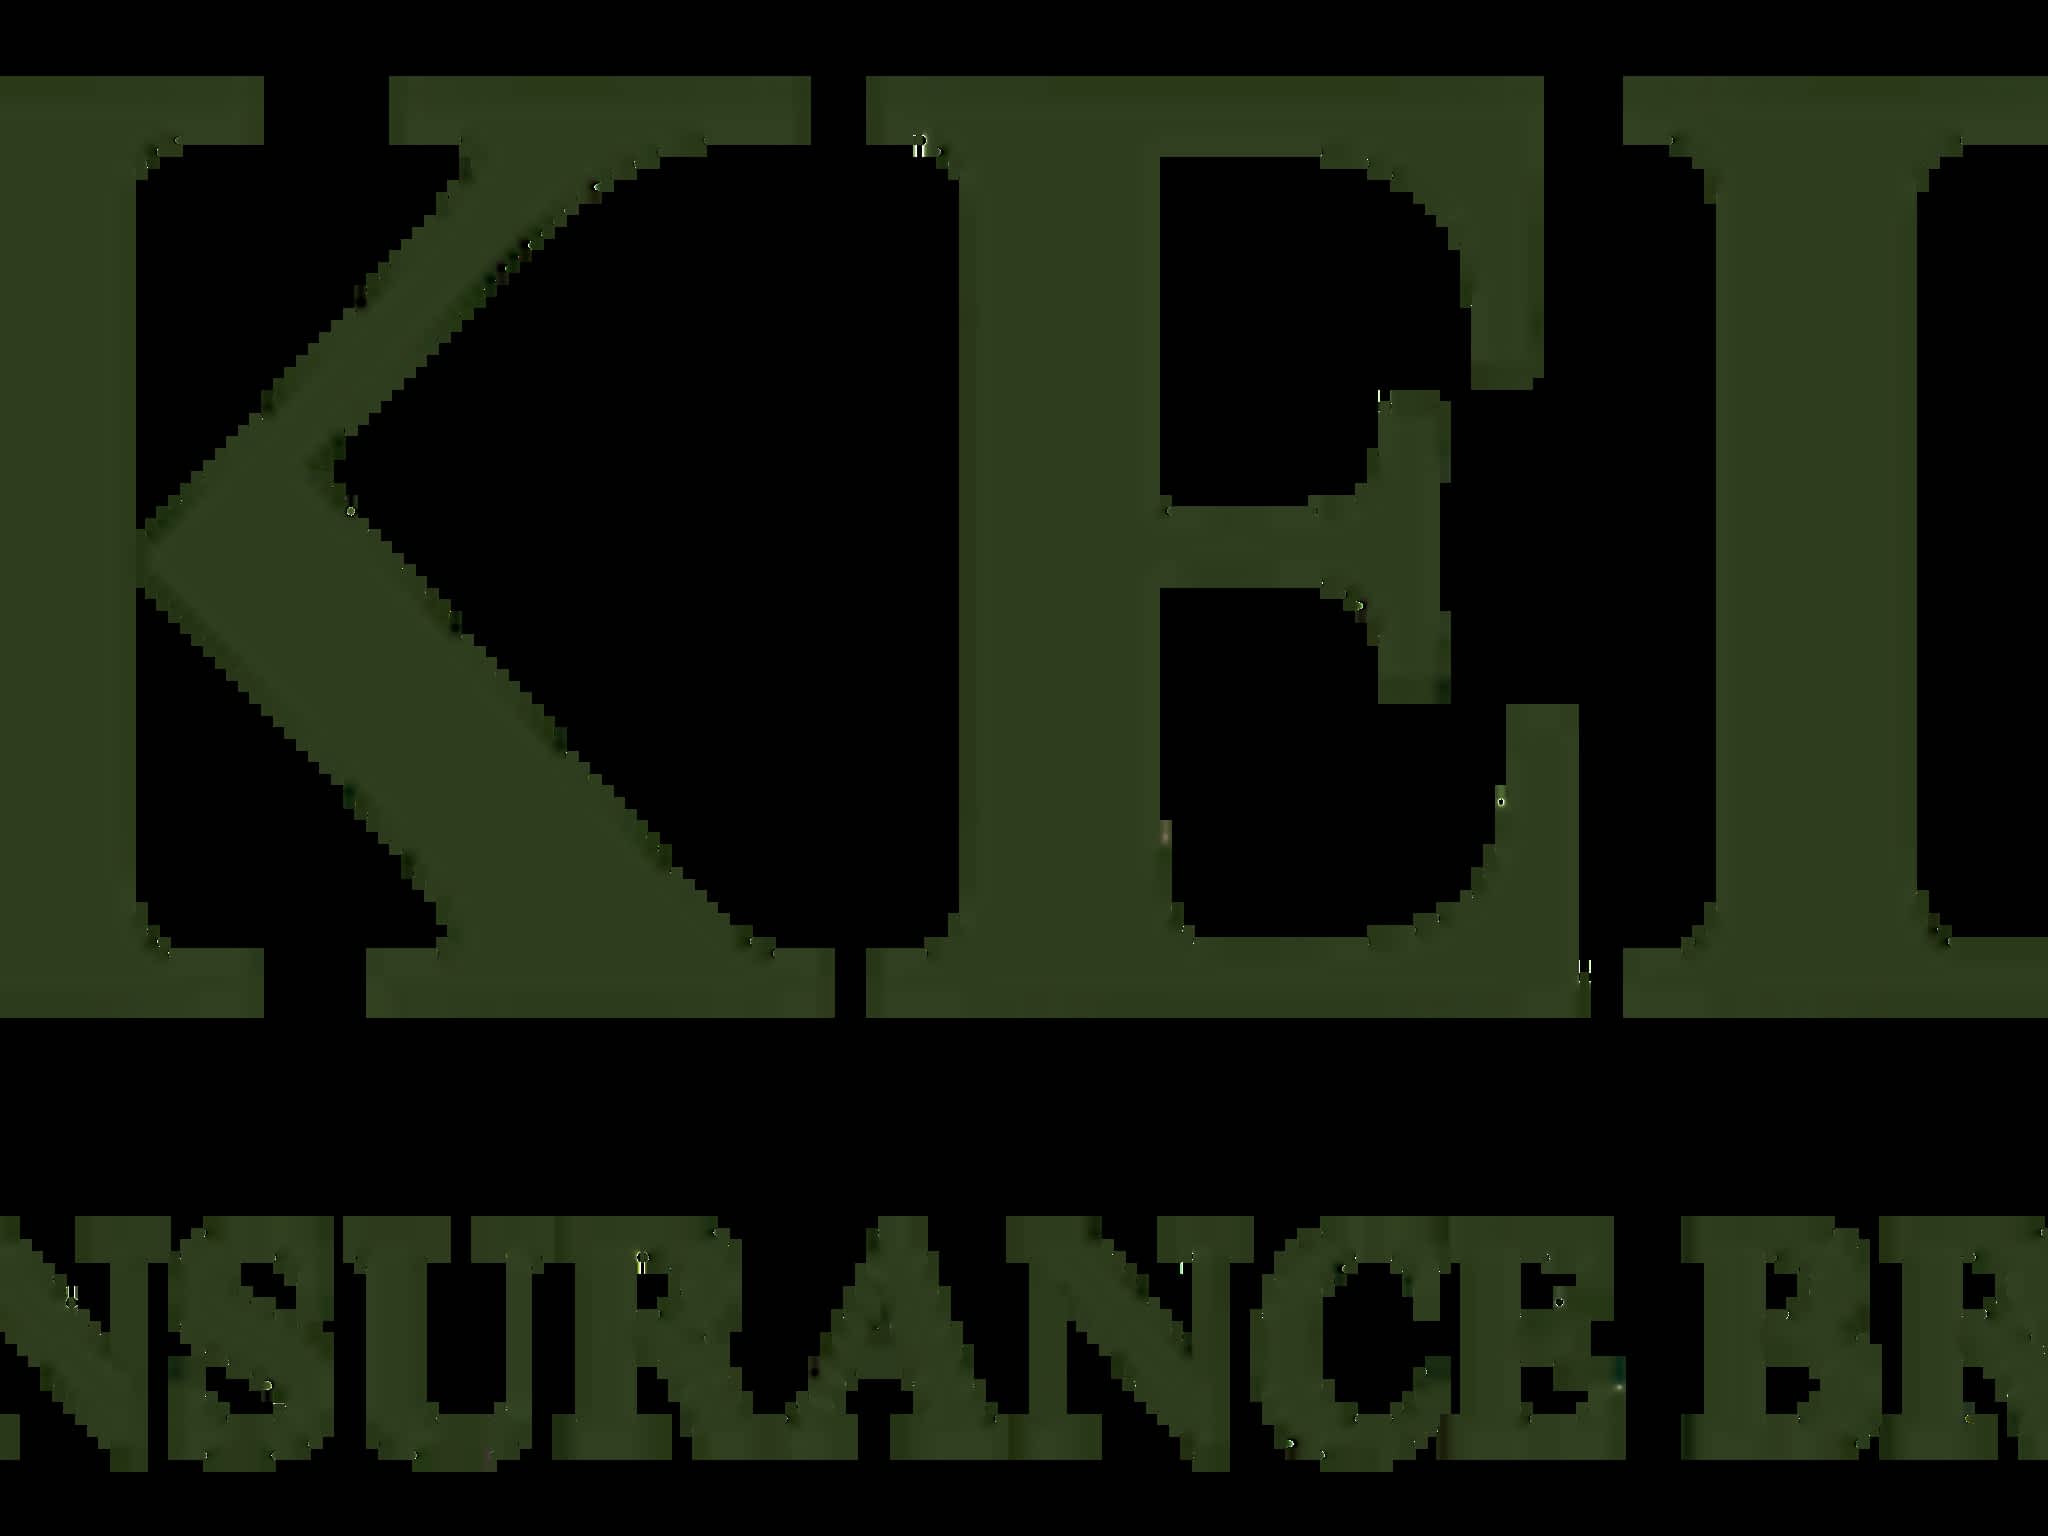 photo Kelly Insurance Brokers Ltd.